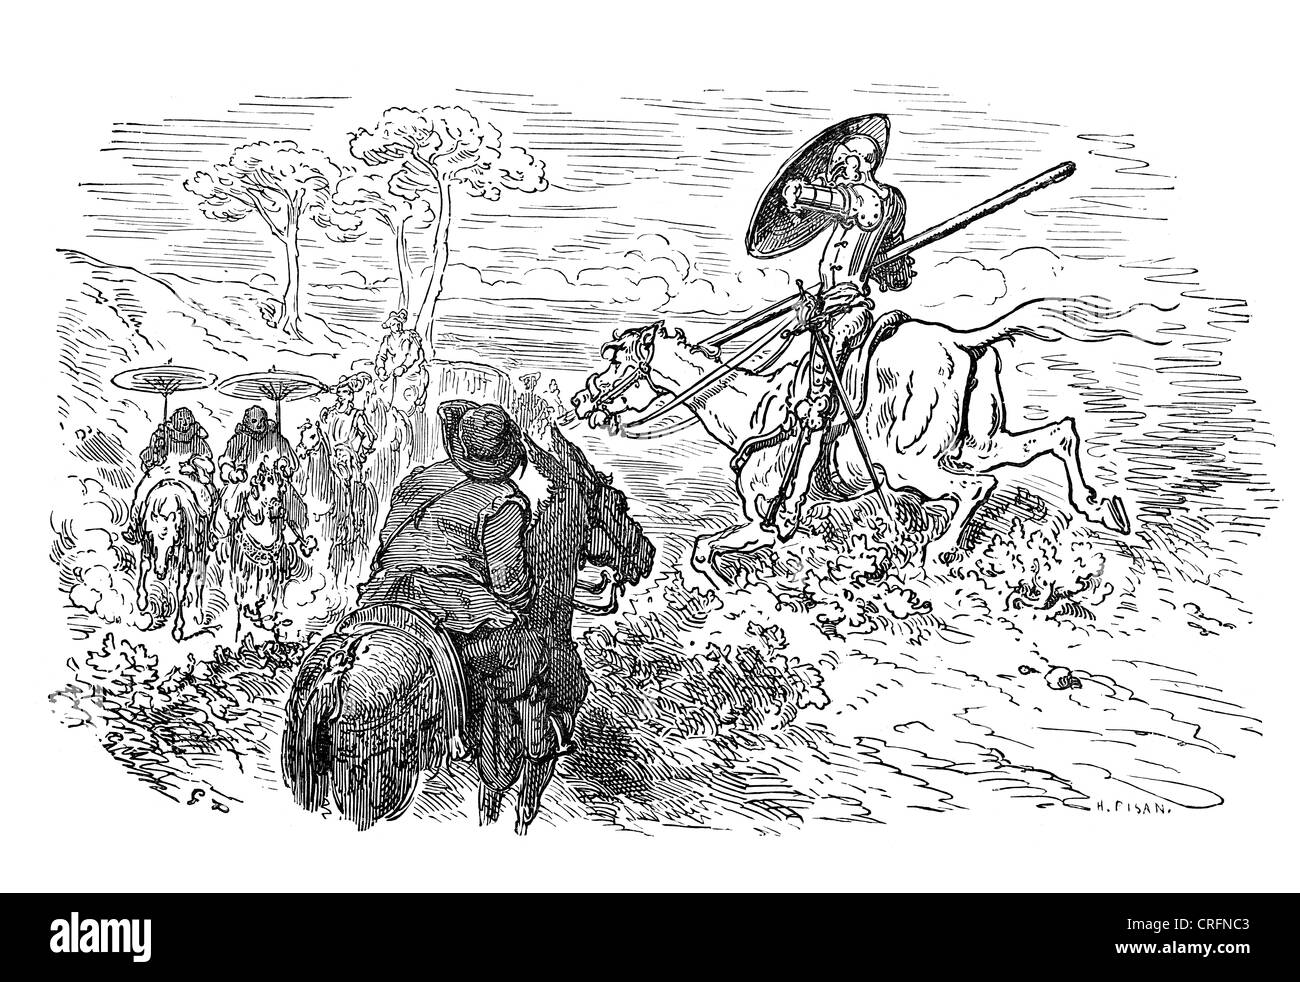 Don Quixote and Sancho Panza. Illustration by Gustave Dore from Don Quixote. Stock Photo